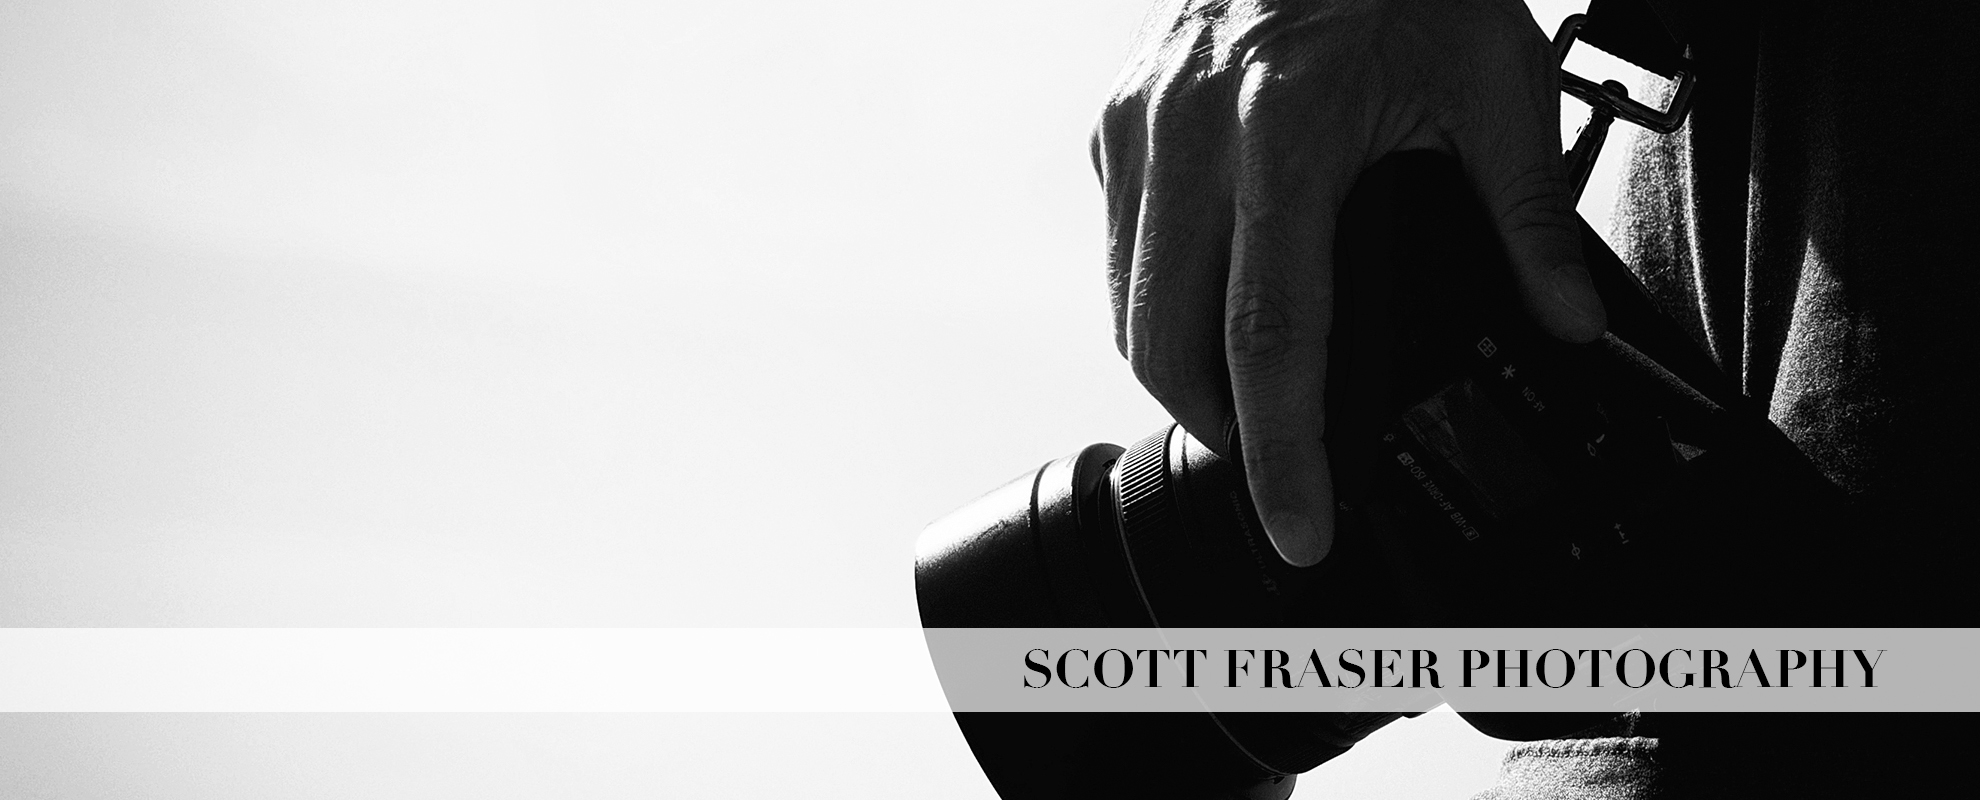 Scott Fraser Photography